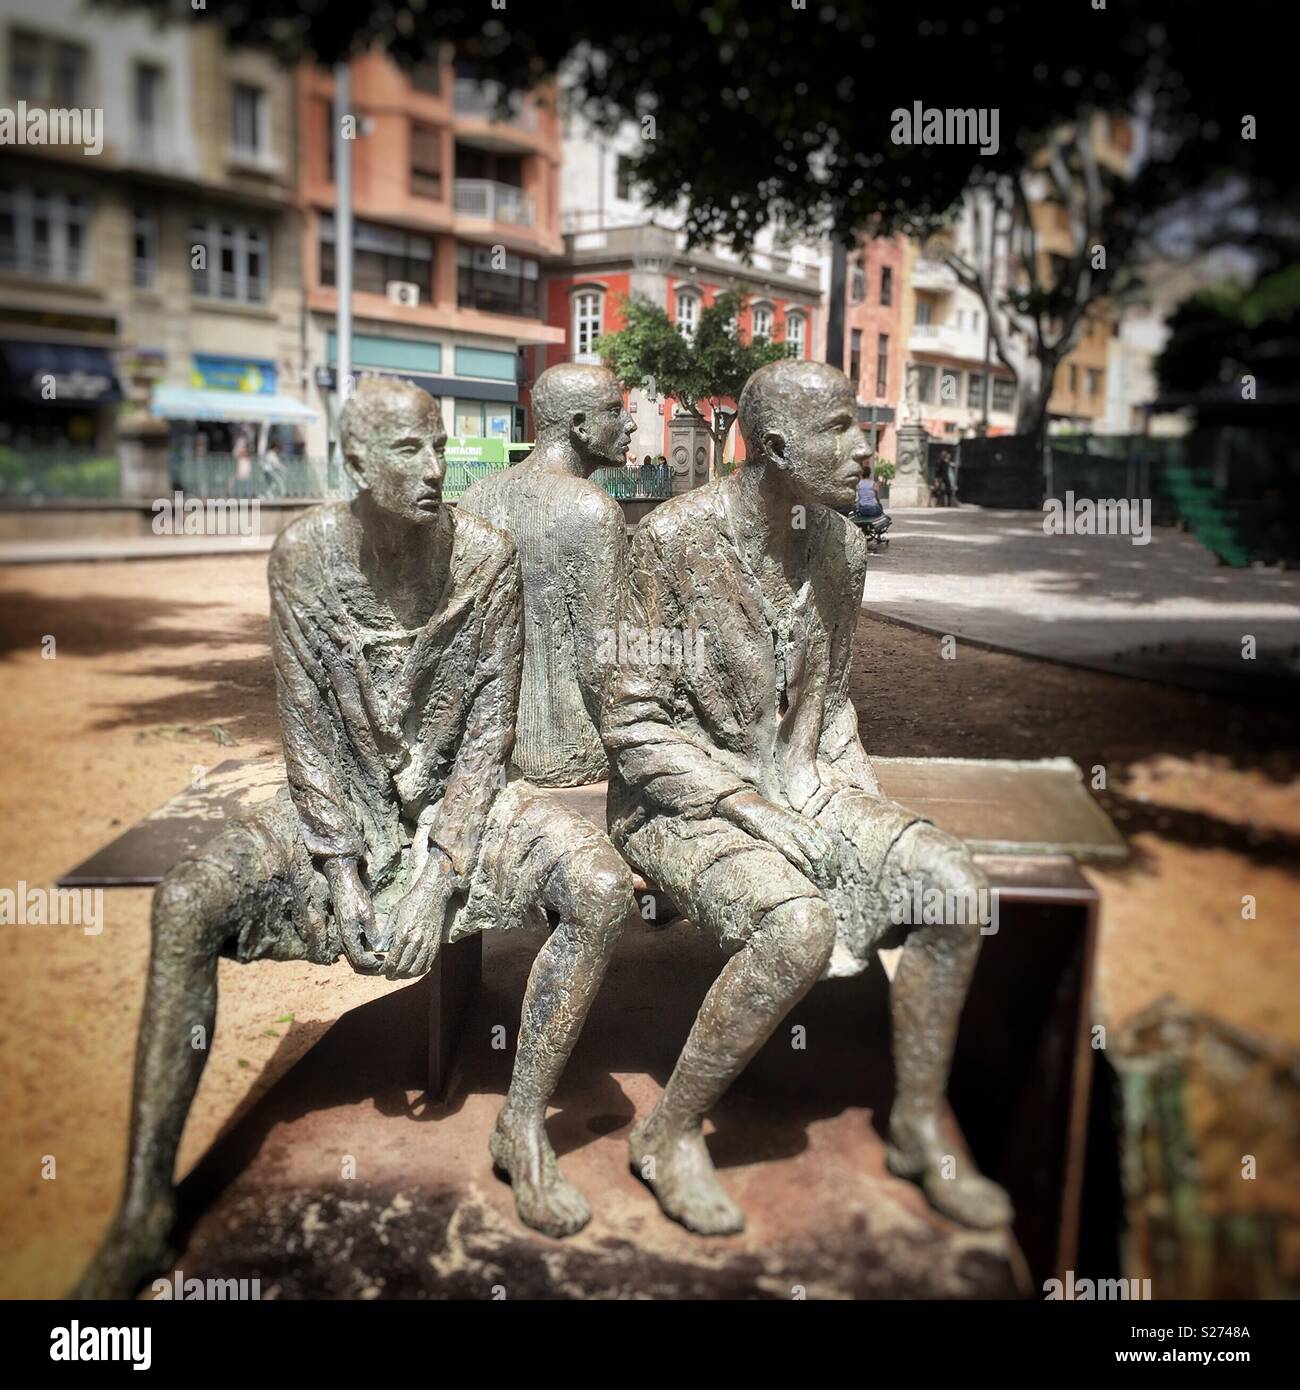 Statue of Three Men sitting on a bench waiting in Santa Cruz, Tenerife, Canary Islands. Stock Photo